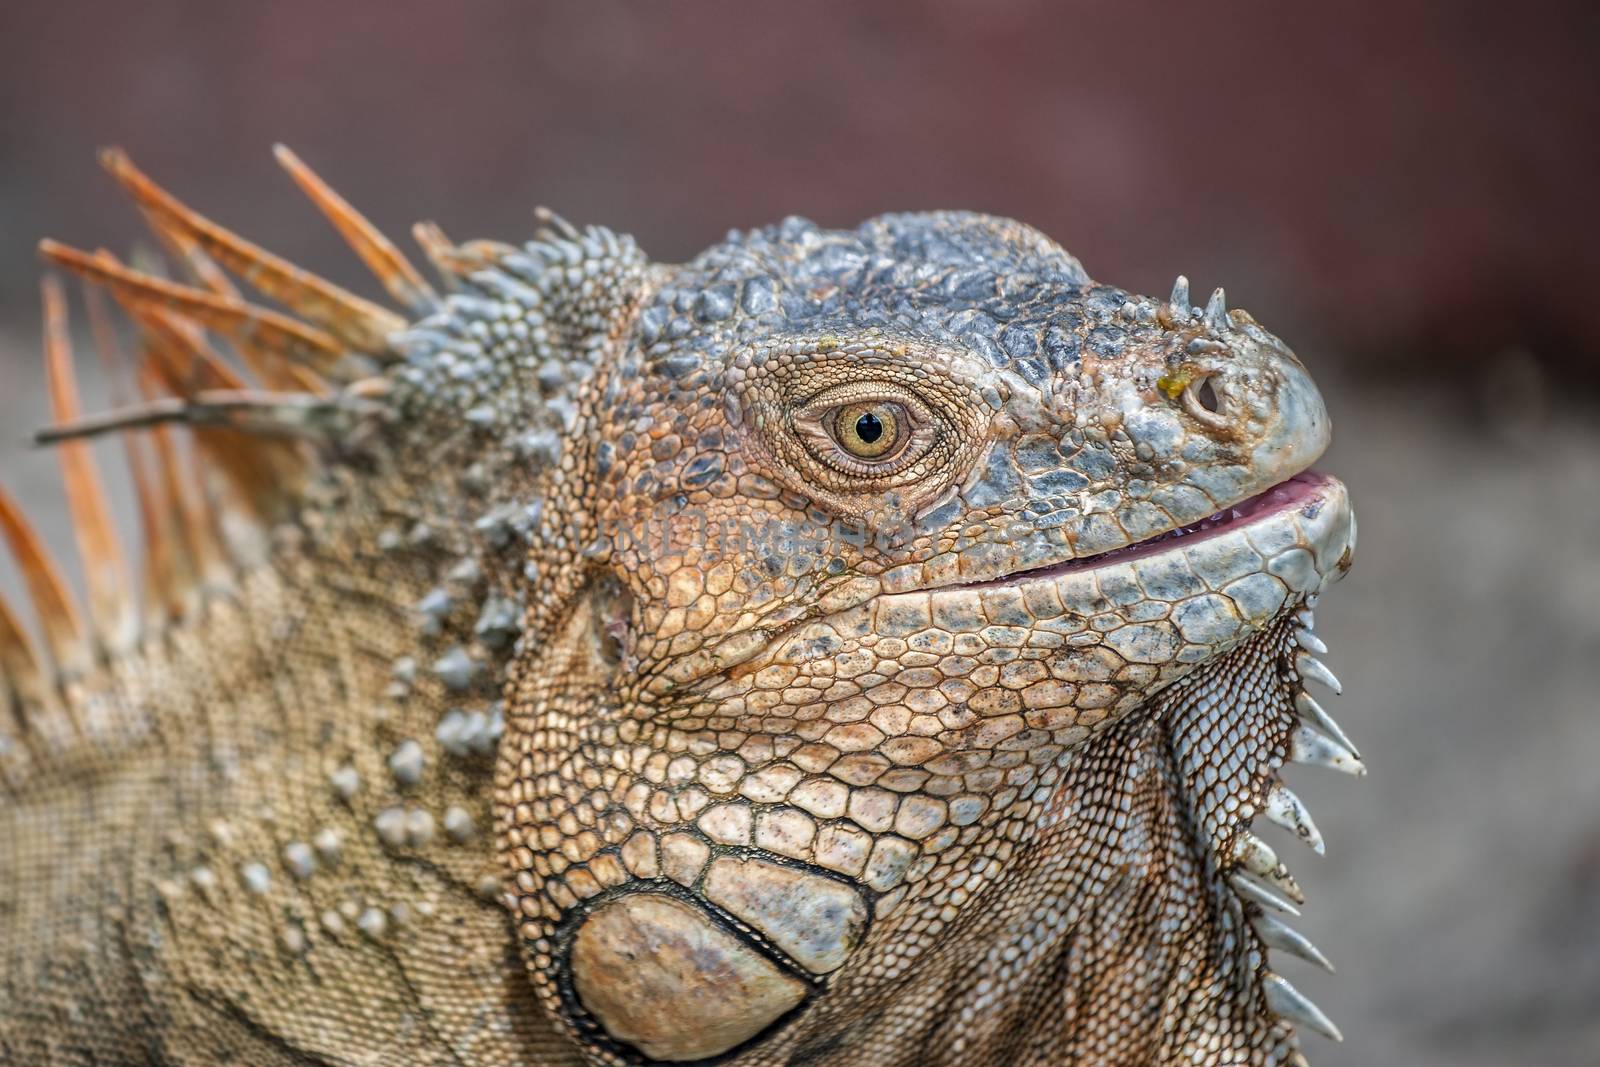 Closeup photograph of a green iguana taken in Costa Rica.